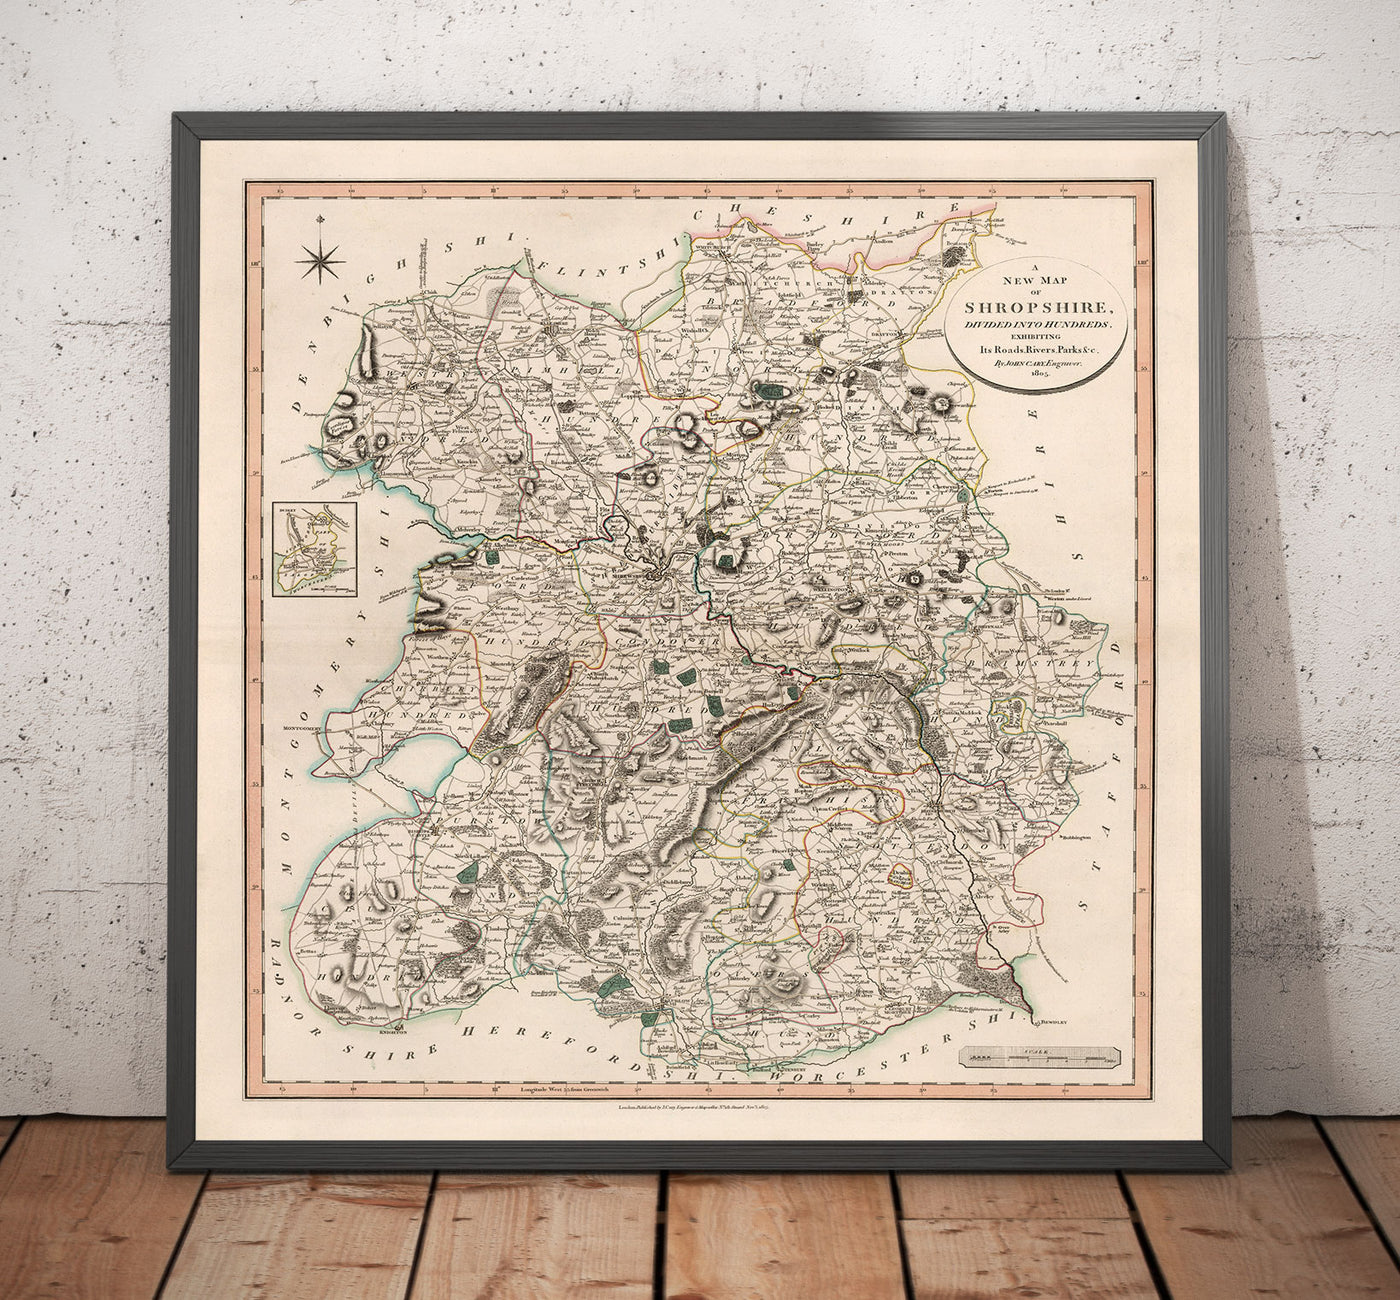 Old Map of Shropshire in 1805 by John Cary - Shrewsbury, Bridgnorth, Ludlow, Ironbridge, Oswestry